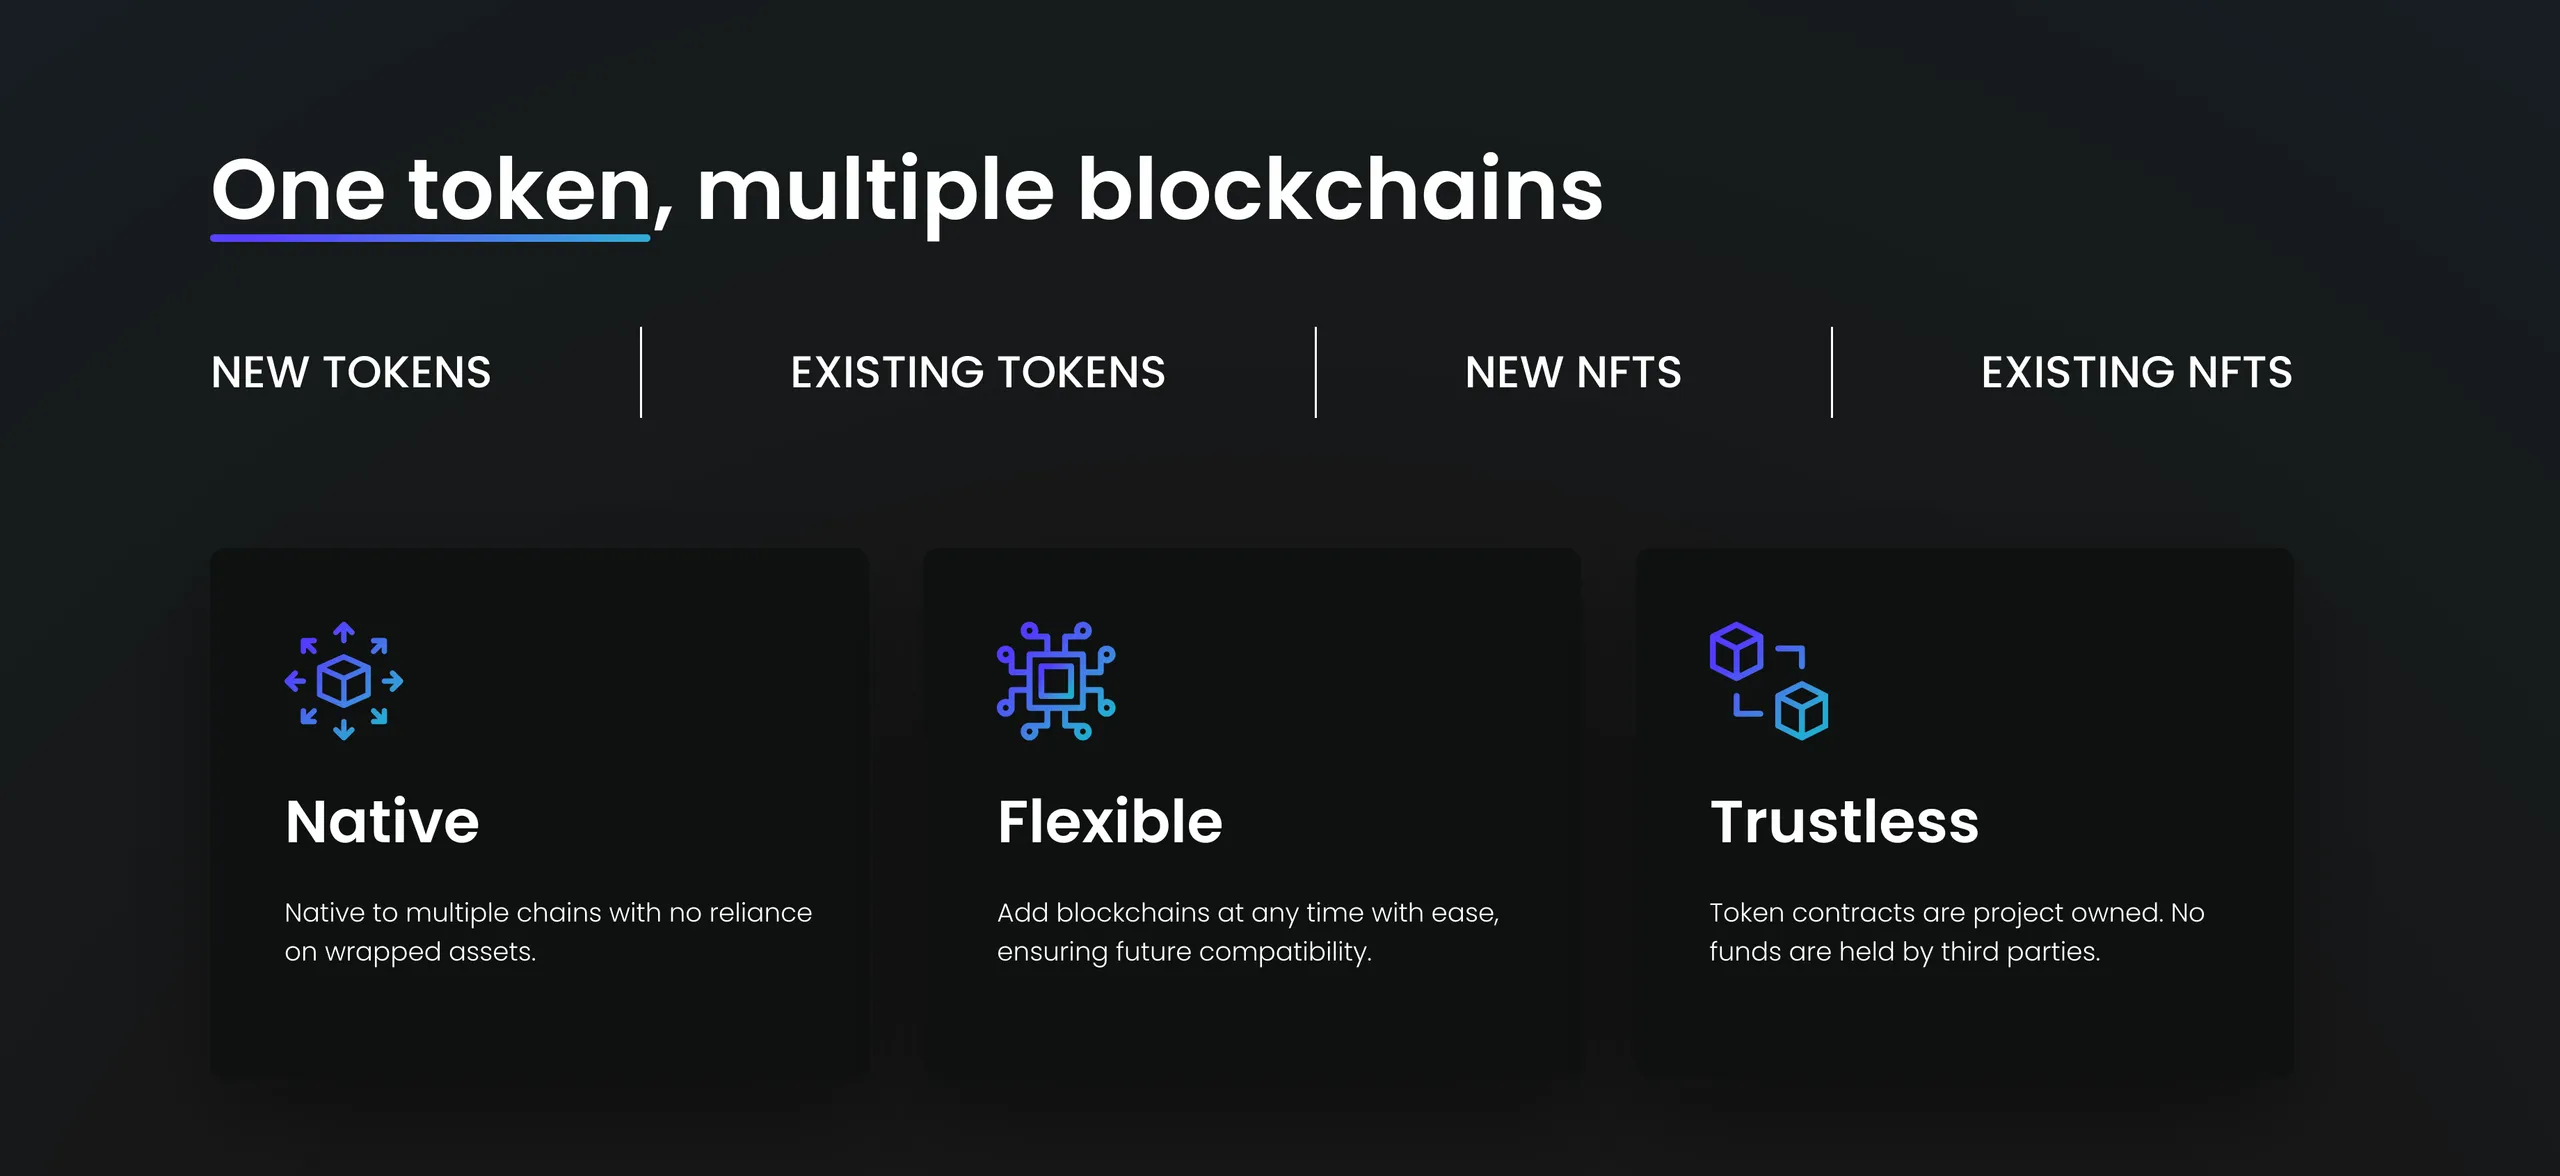 nexa token multiple blockchains screenshot